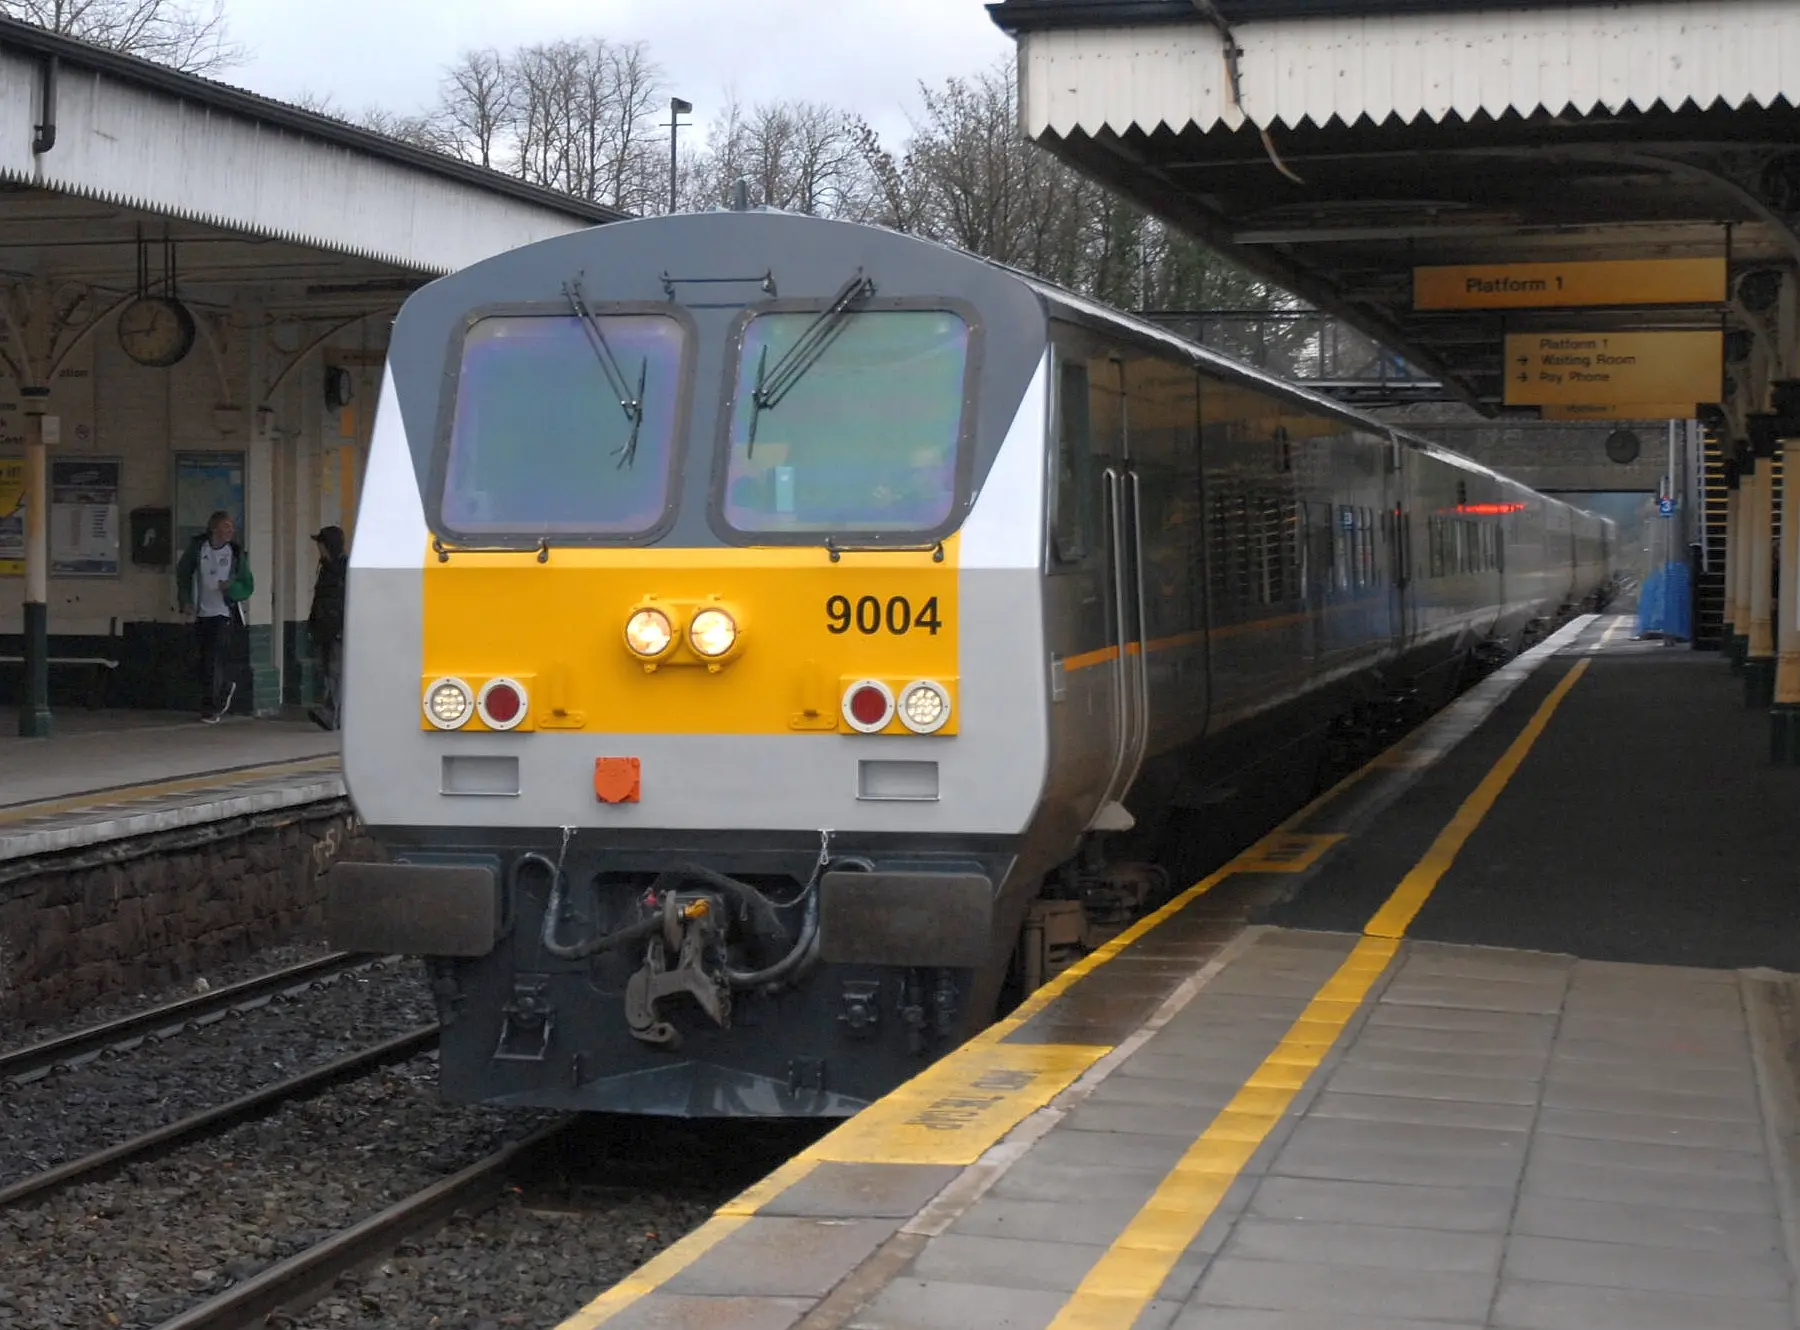 línea de ferrocarril dublín-belfast - Cuánto cuesta el tren de Dublín a Belfast